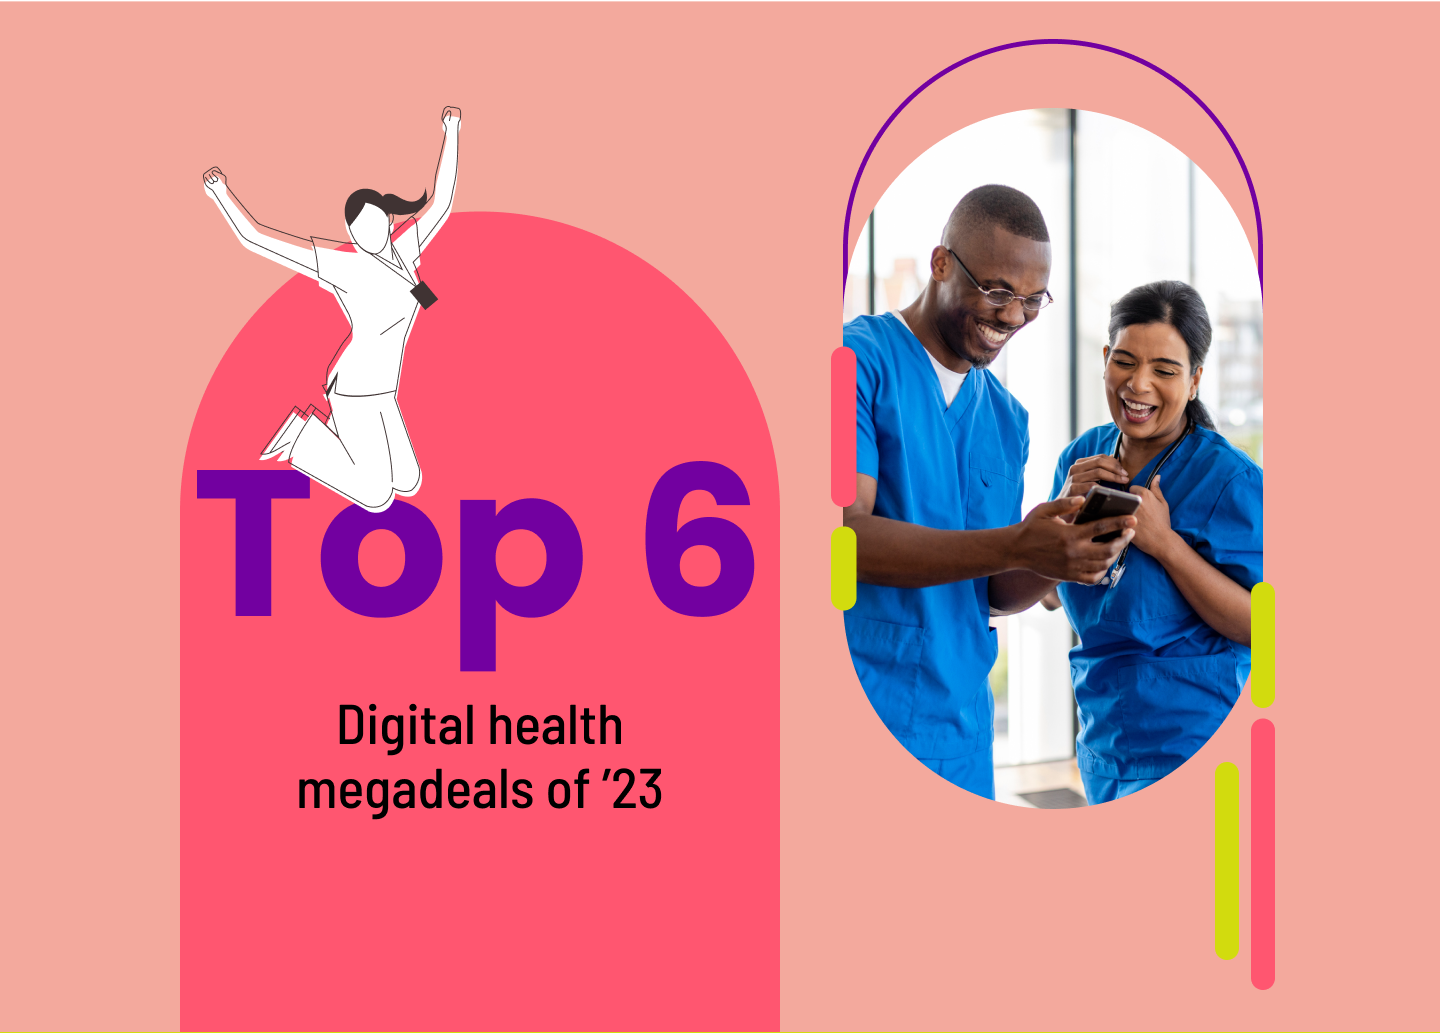 Award: Top 6 digital health megadeals of '23